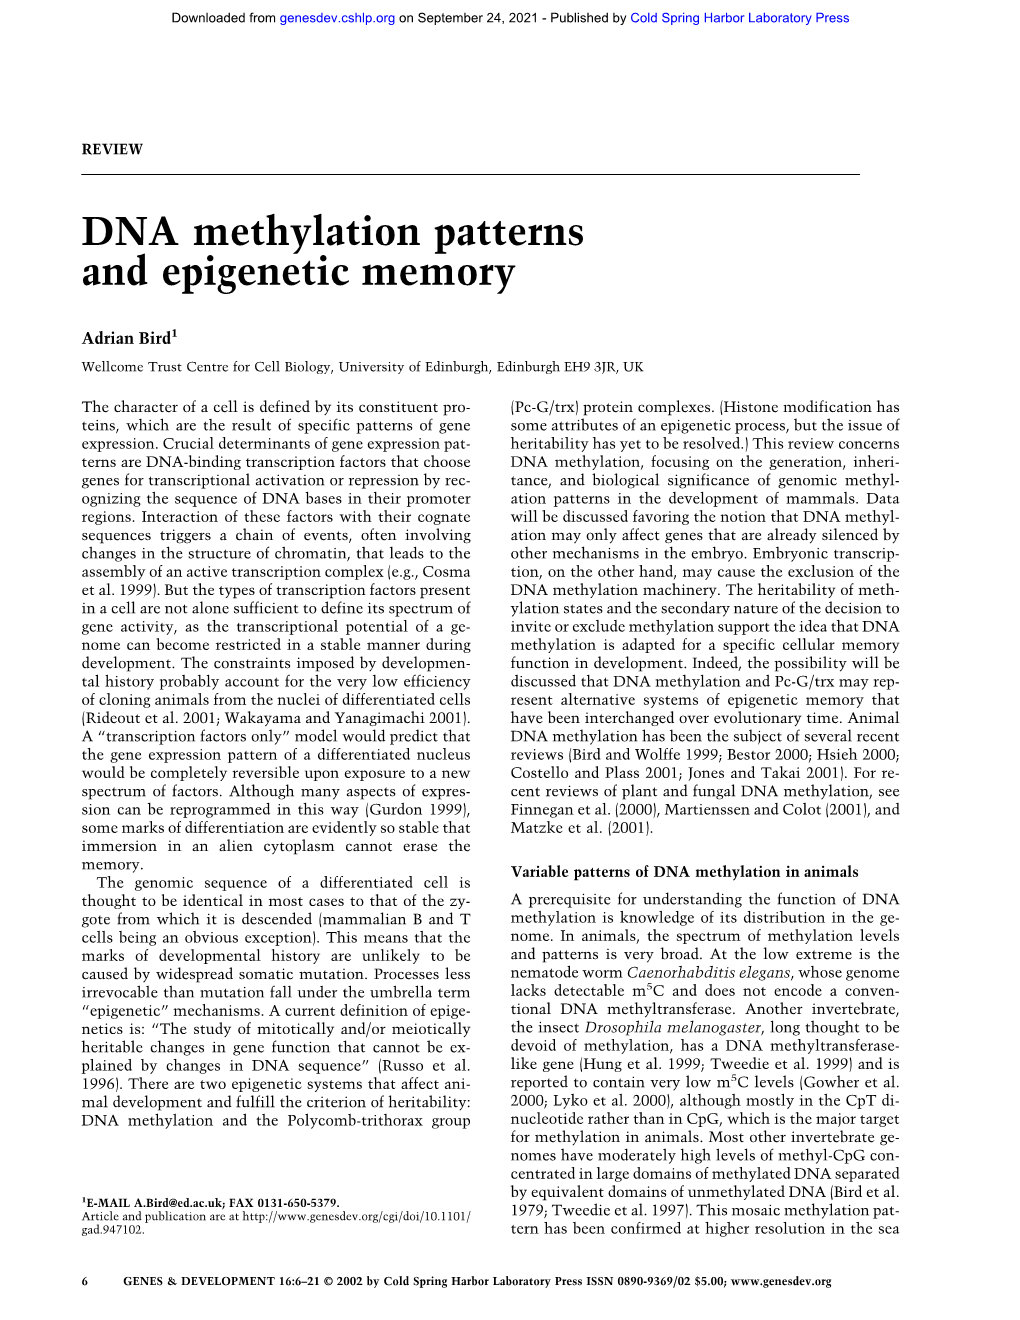 DNA Methylation Patterns and Epigenetic Memory